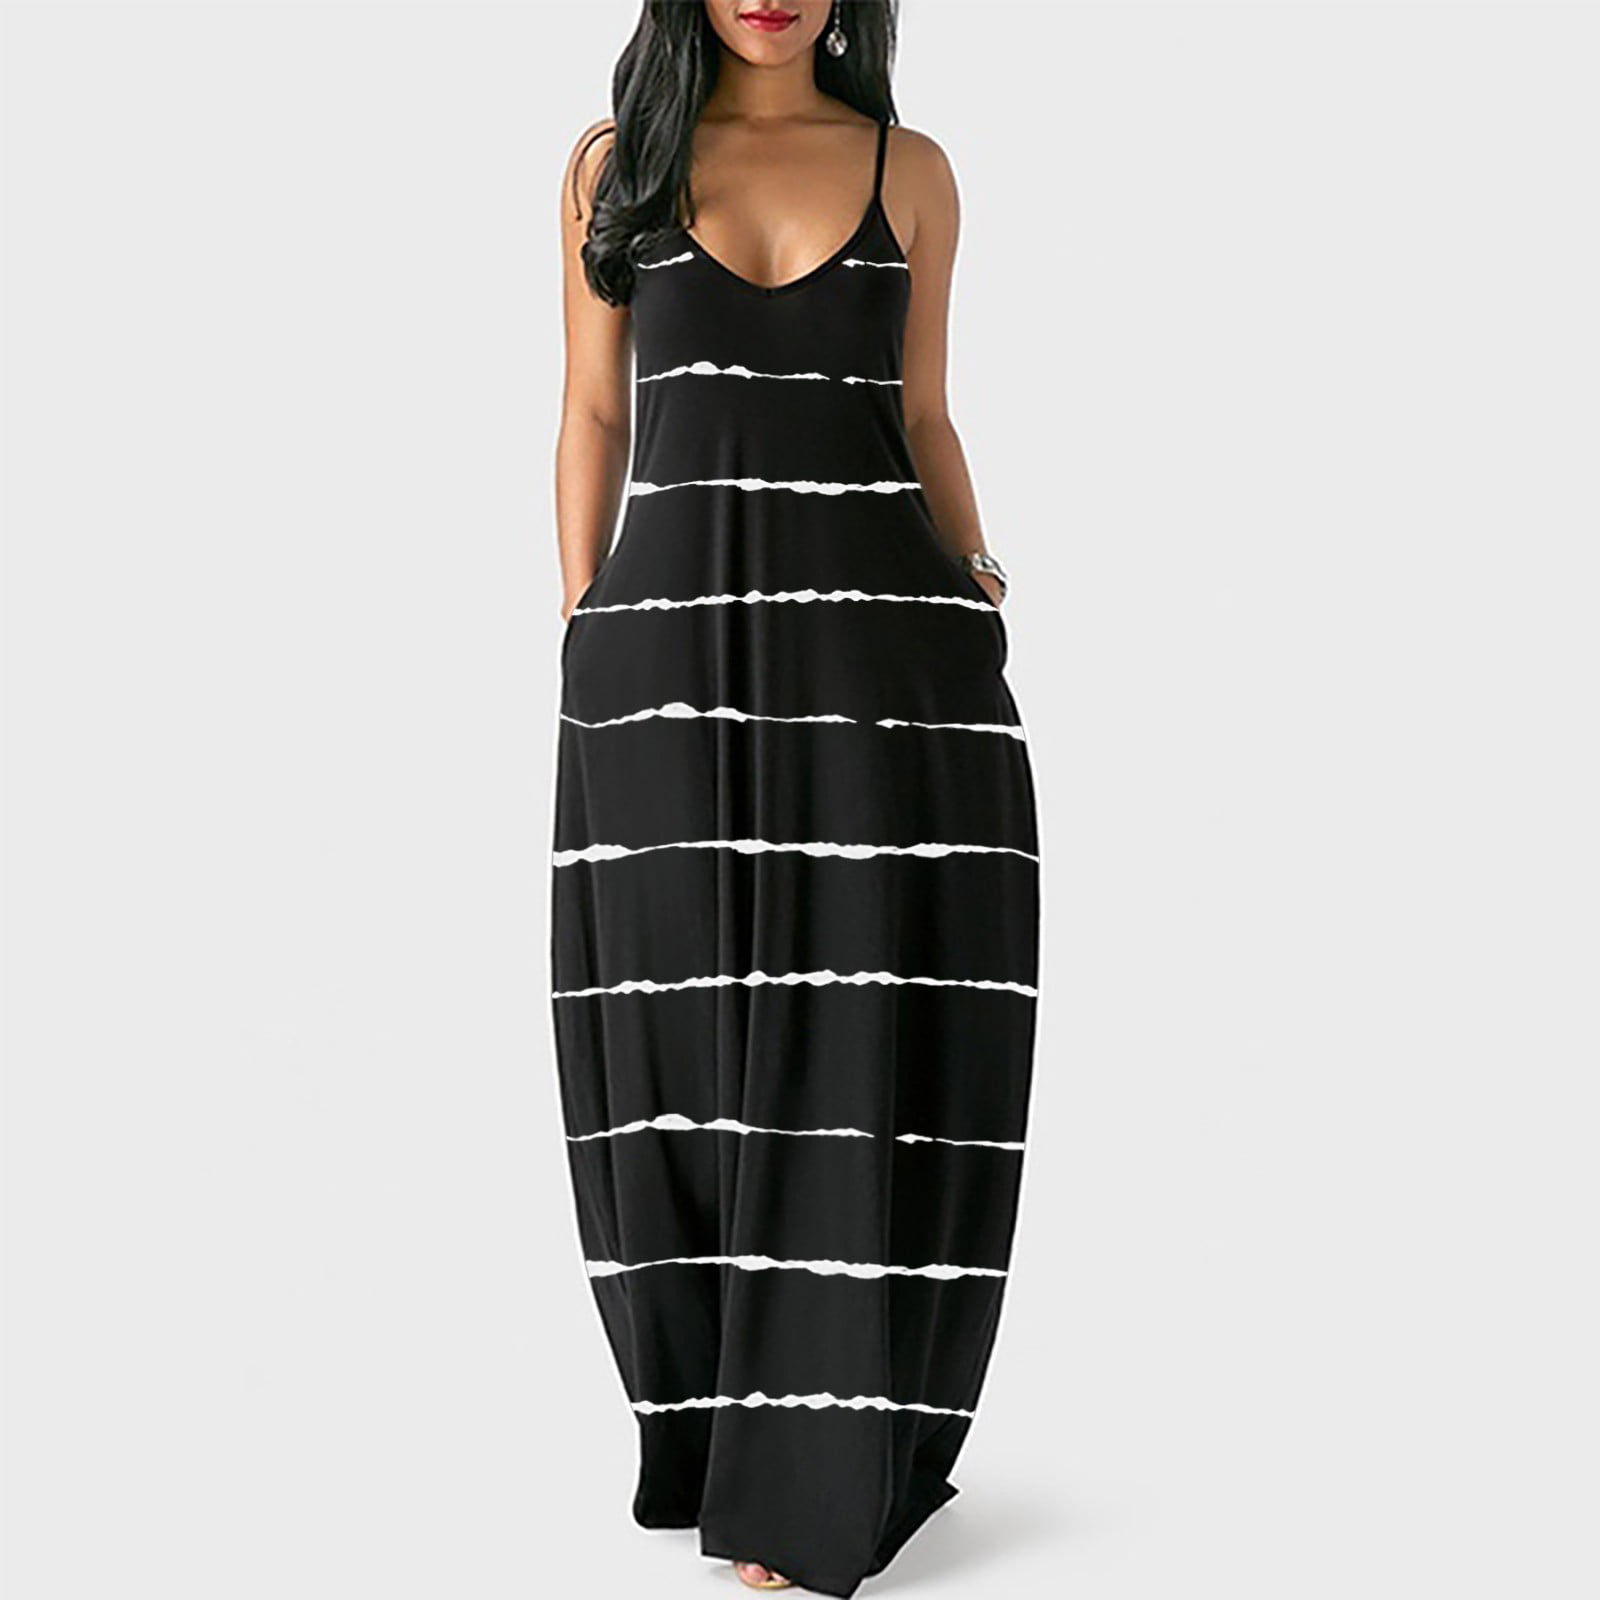 Women's Summer Thin Strap Dress Black and White